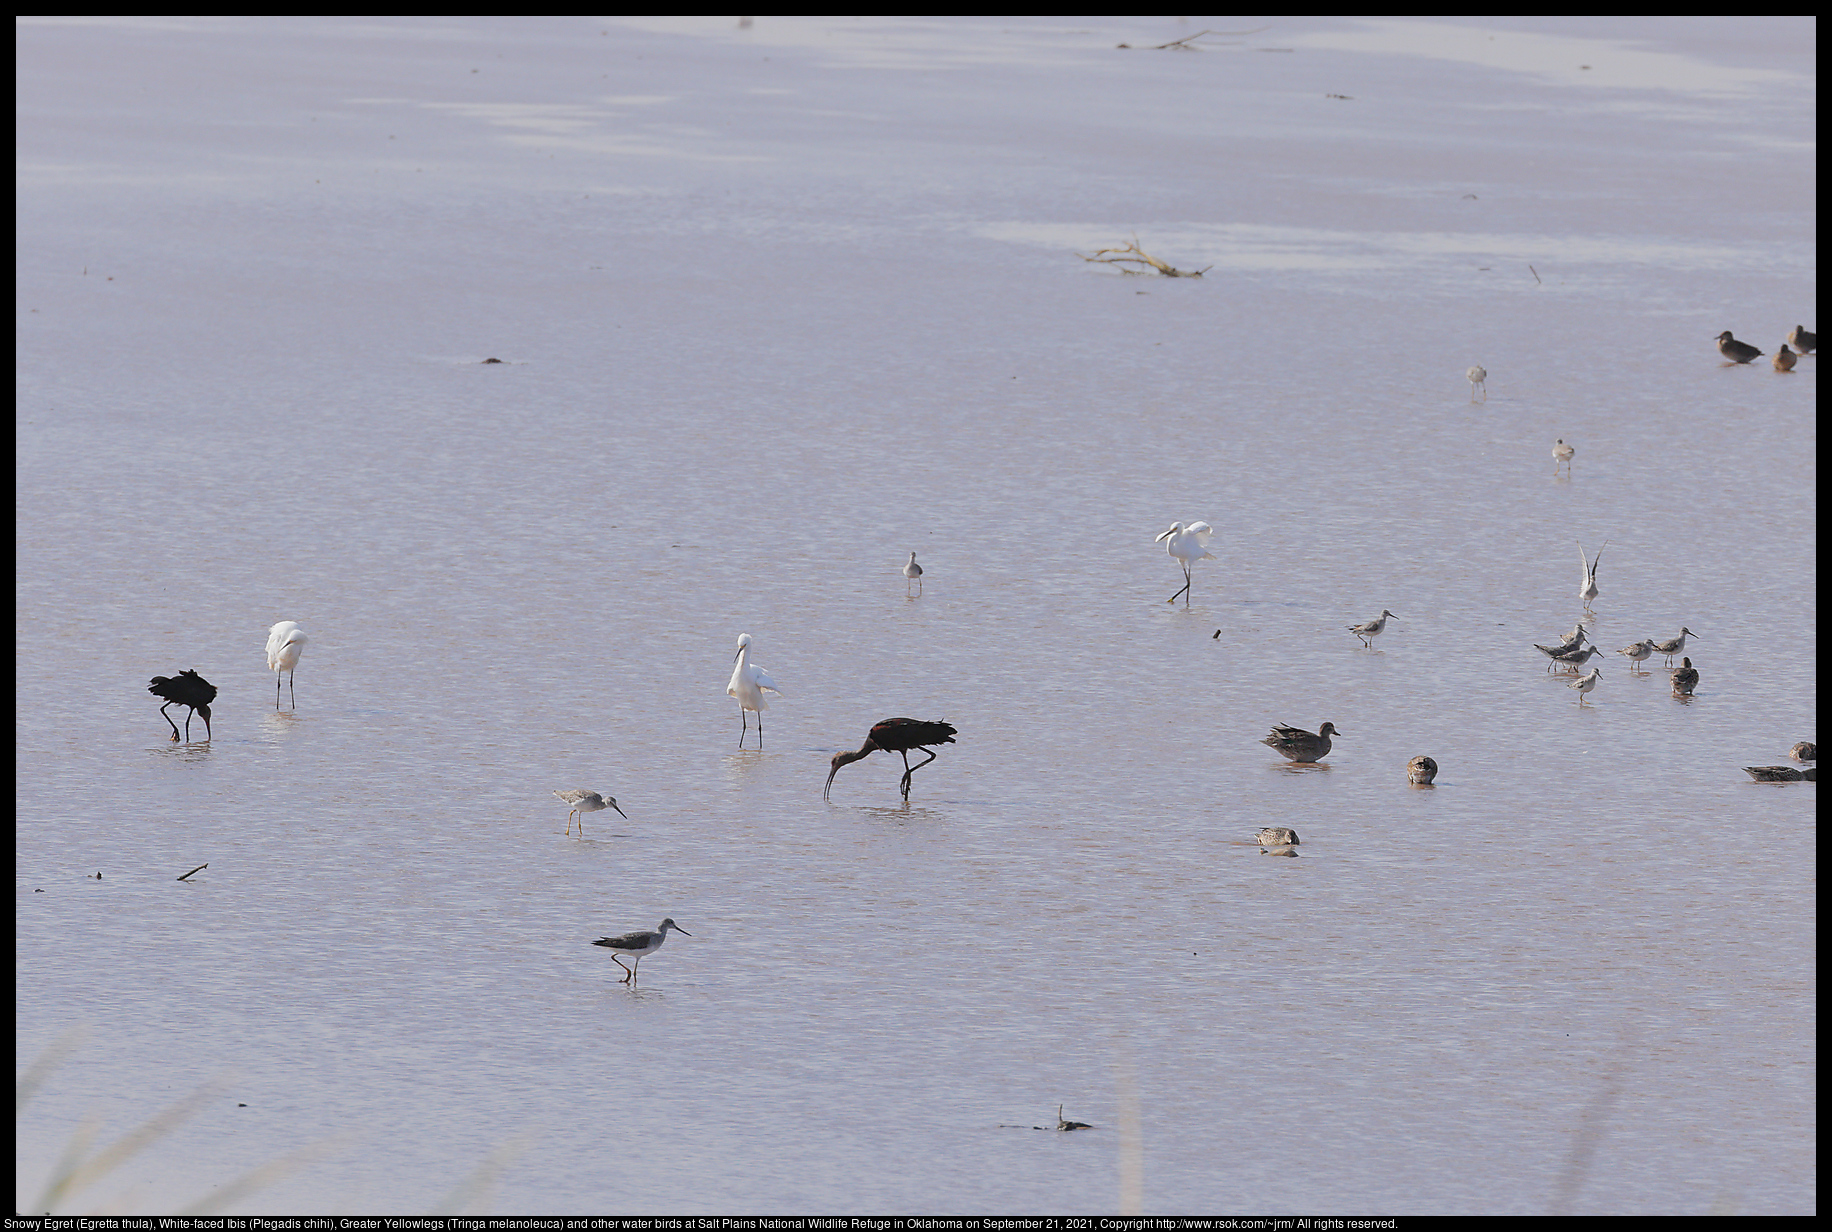 Snowy Egret (Egretta thula), White-faced Ibis (Plegadis chihi), Greater Yellowlegs (Tringa melanoleuca) and other water birds at Salt Plains National Wildlife Refuge in Oklahoma on September 21, 2021